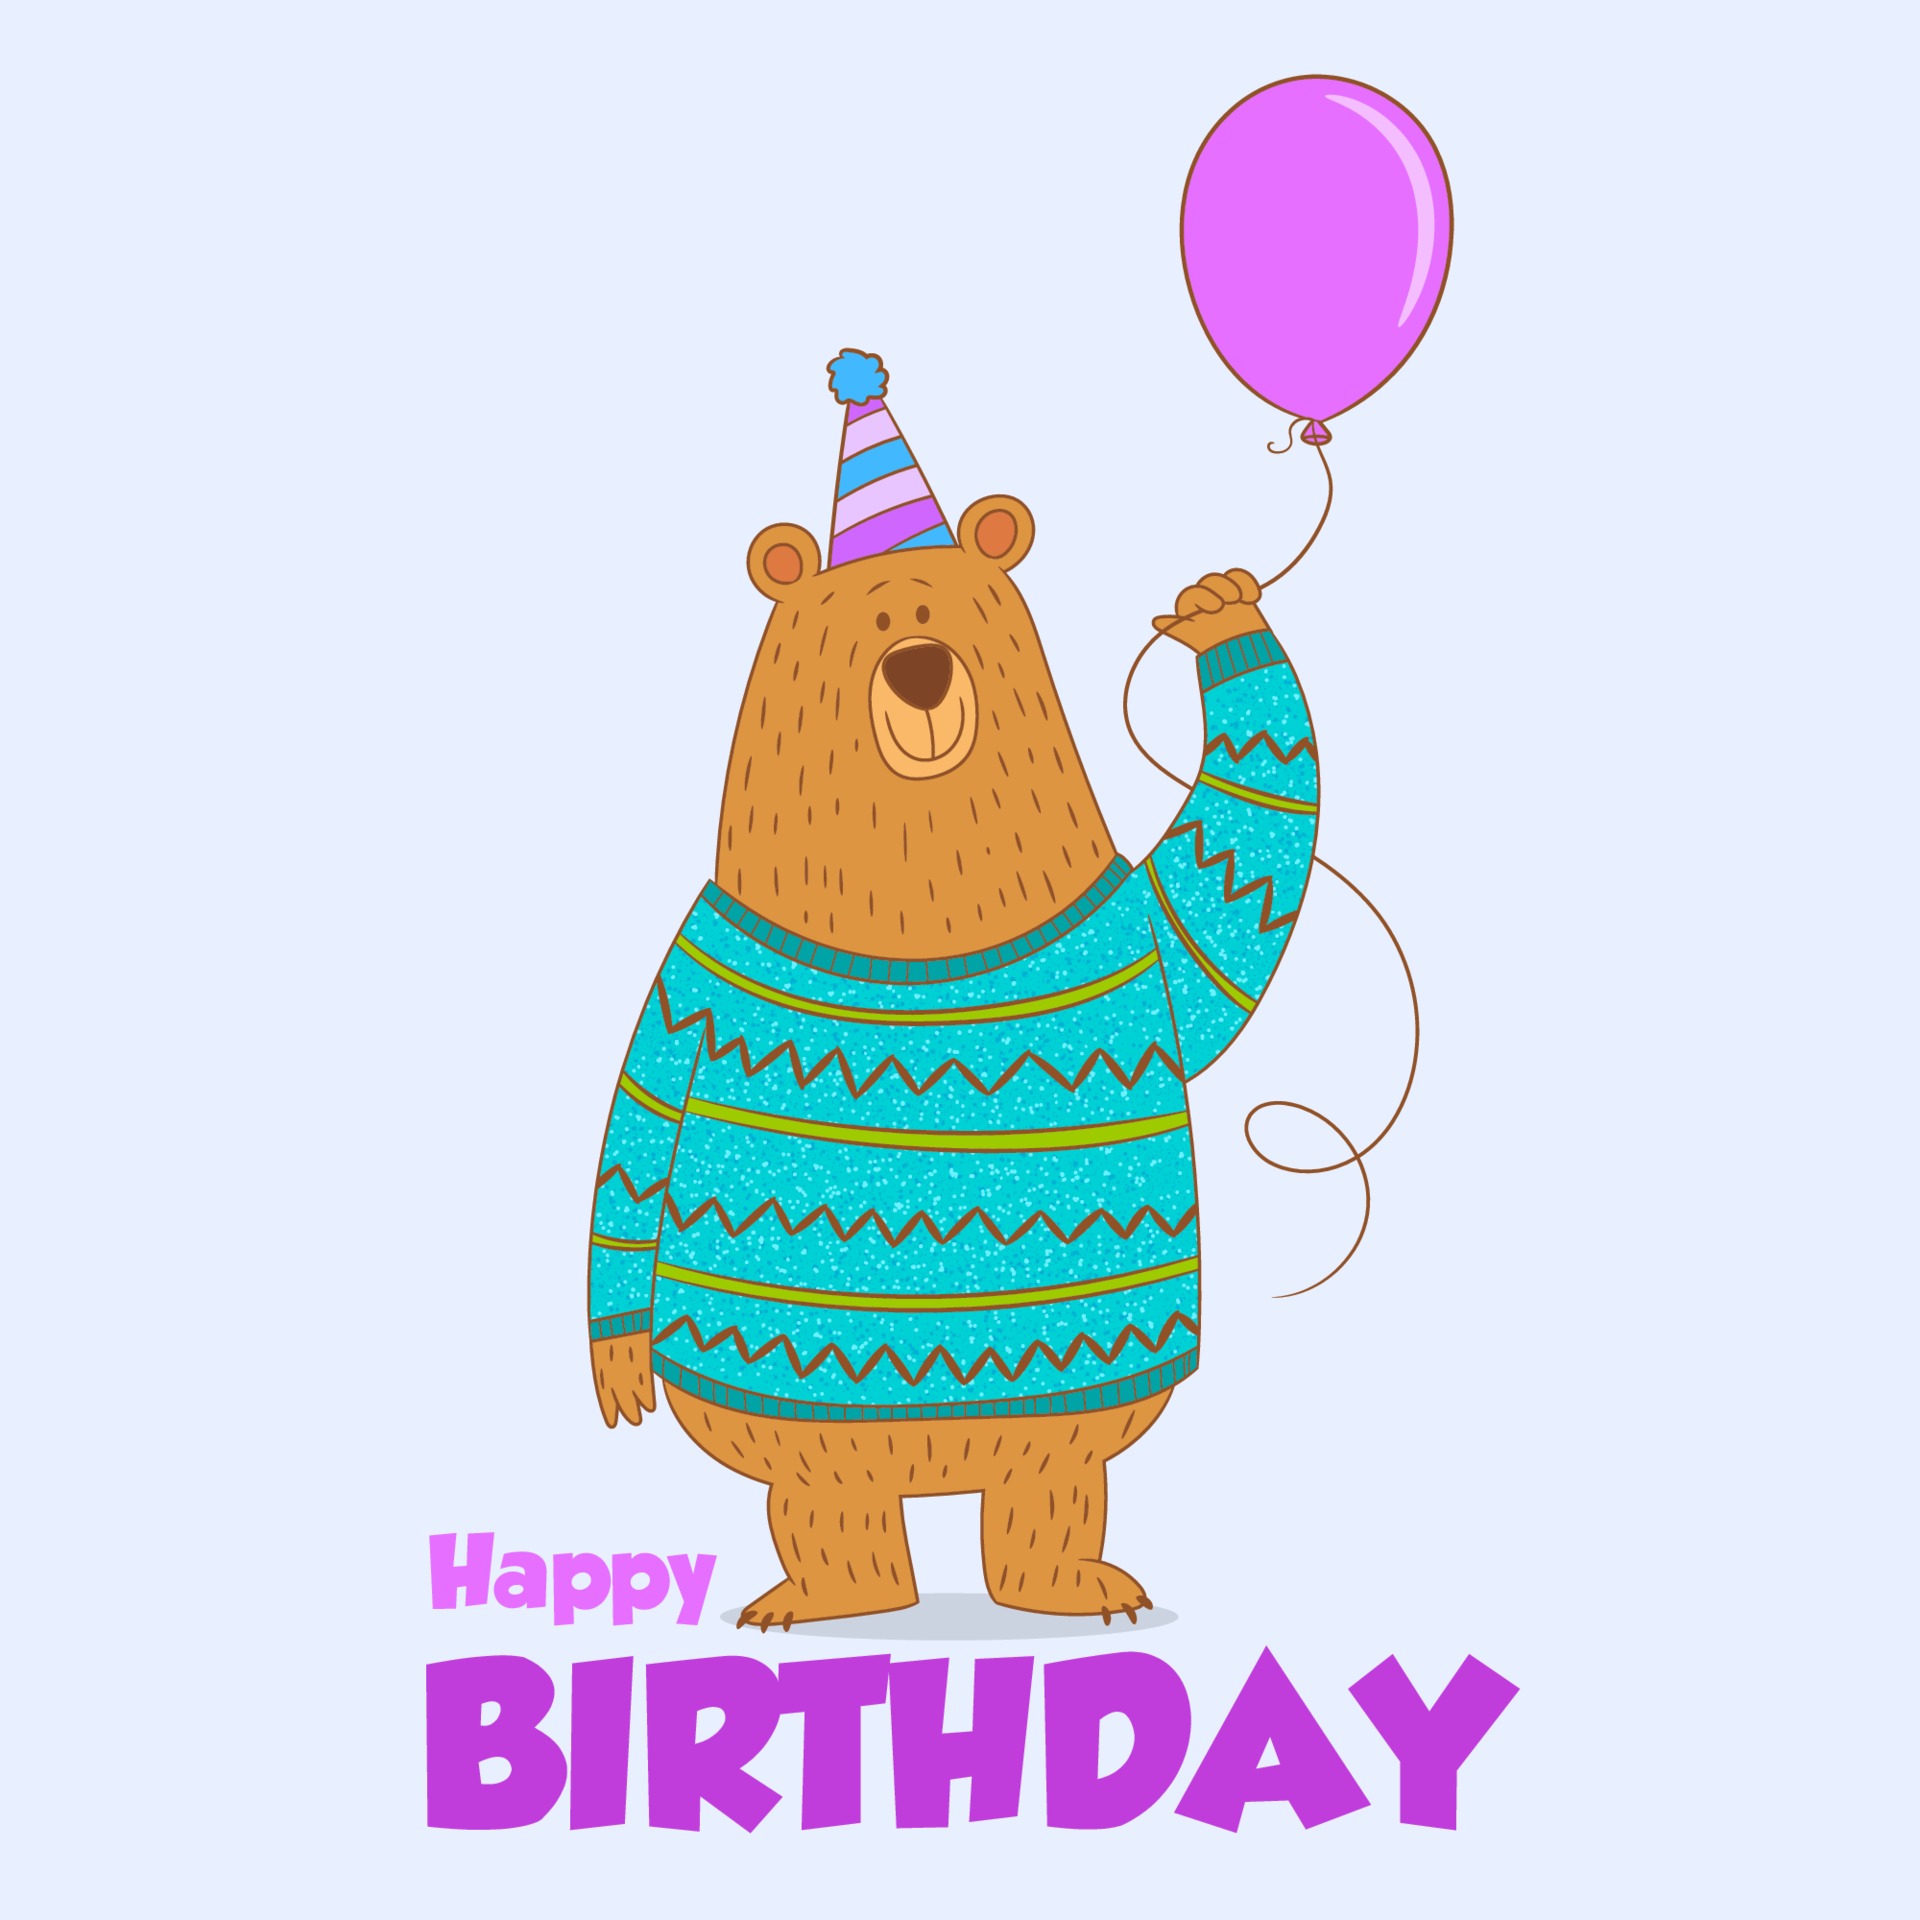 Happy birthday greeting card with cartoon bear 2896823 Vector Art at  Vecteezy